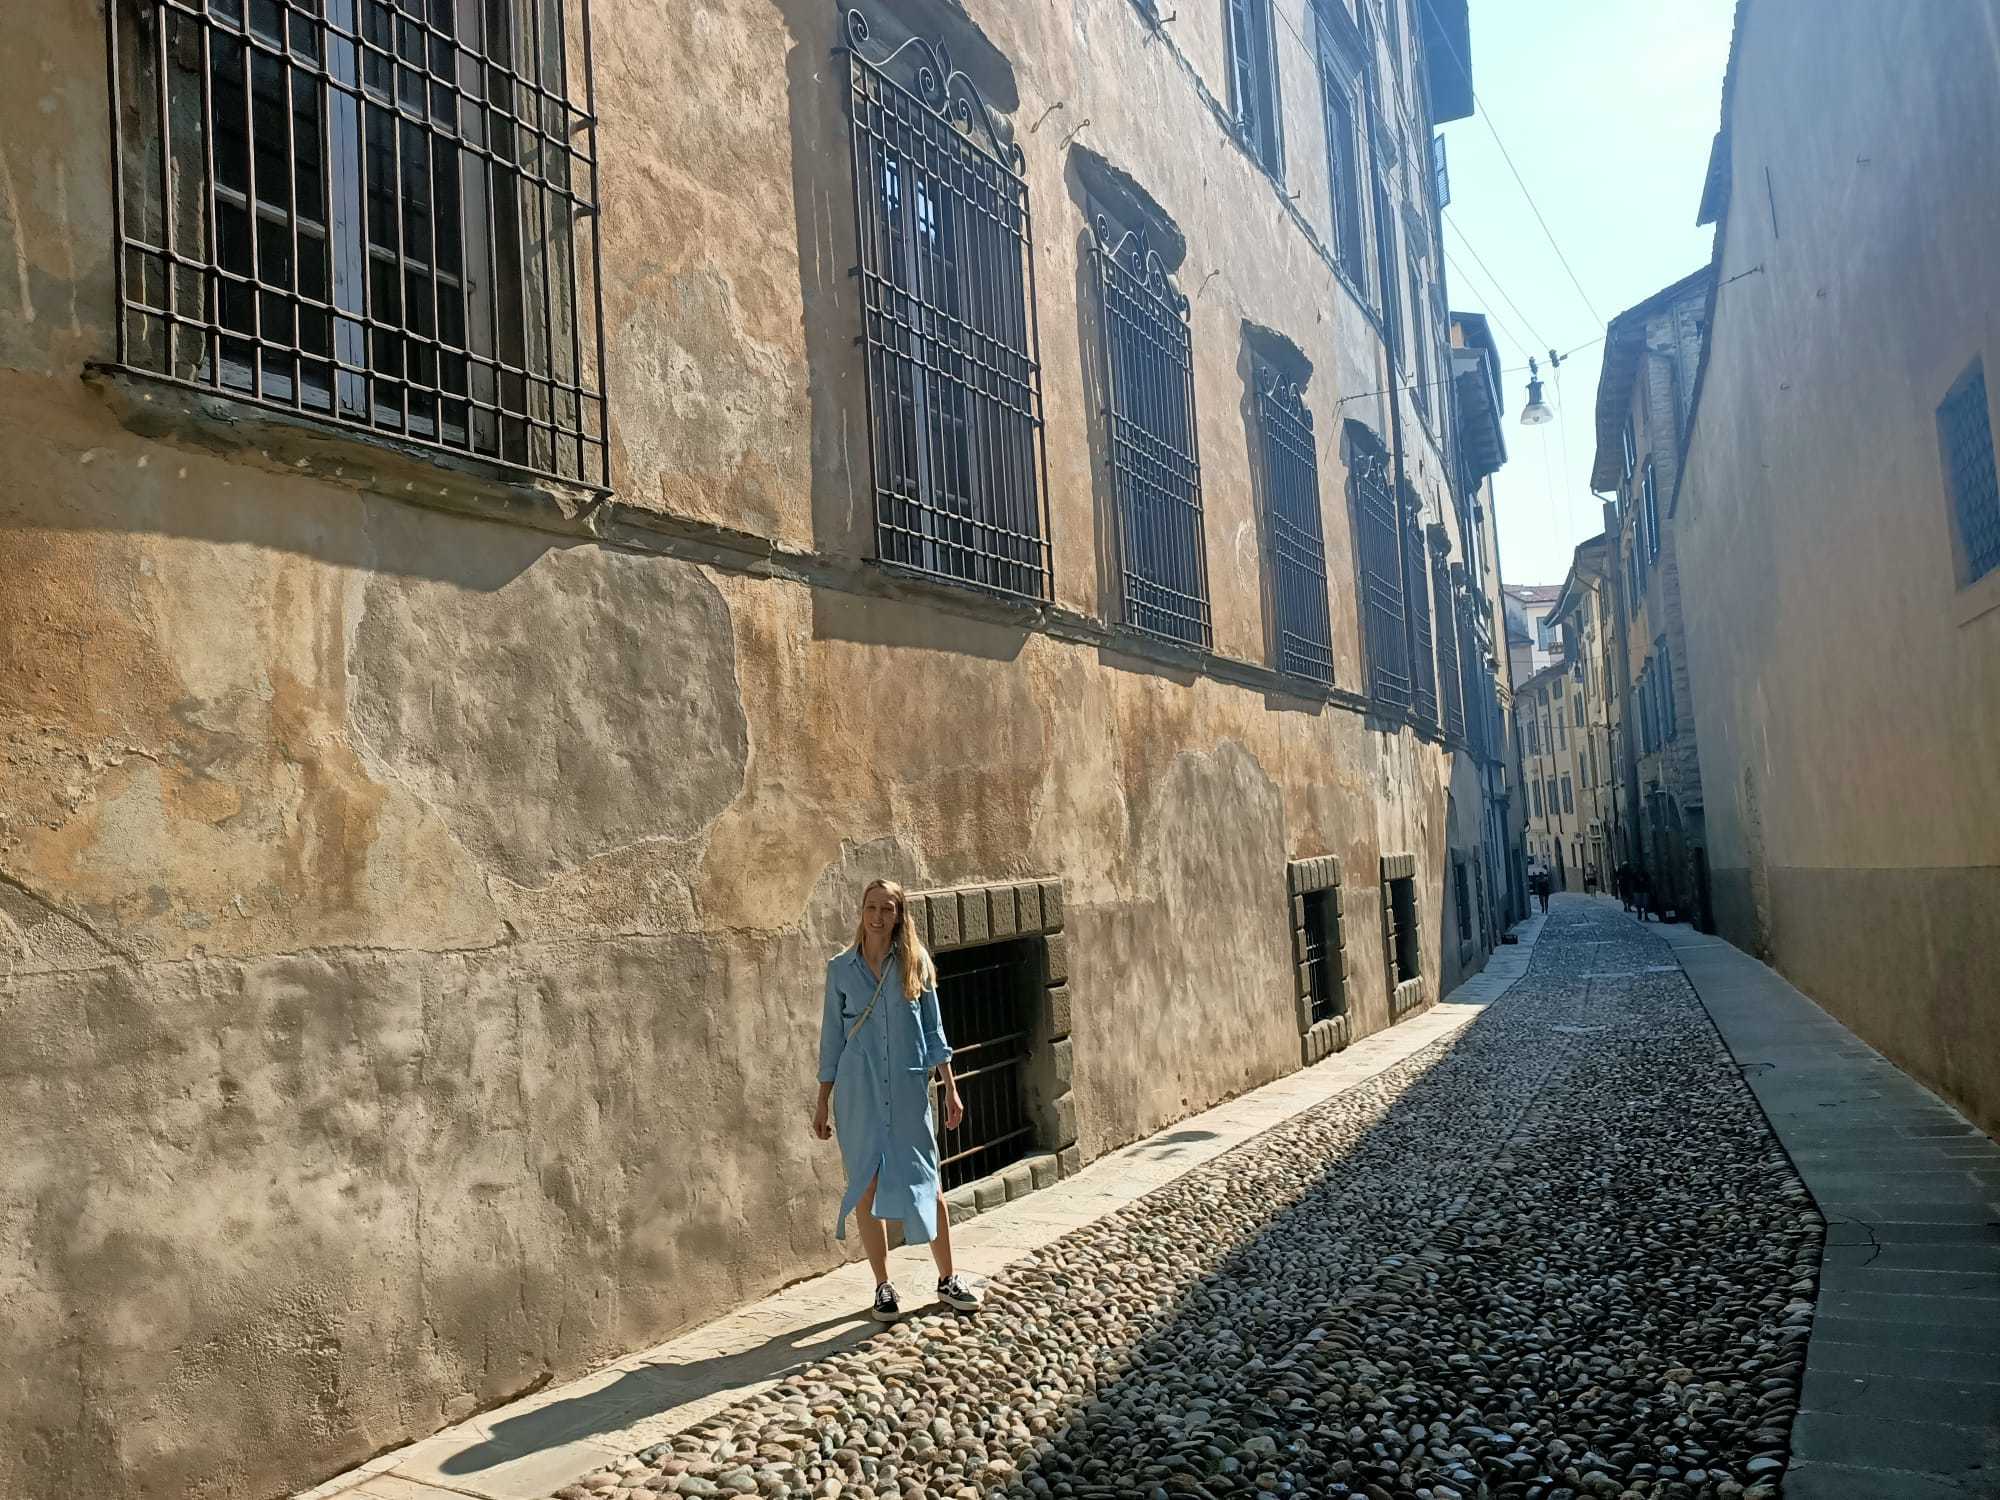 Sara Benaglia in front of one of the walls of Domus Magna, where Base Arte Contemporanea Odierna is located. Photo: Gabriëlle Schleijpen, Bergamo, September 2020.